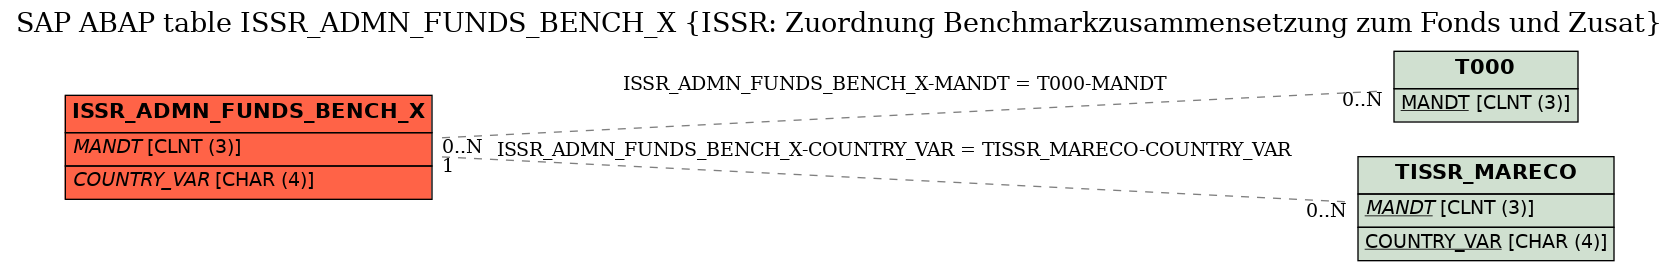 E-R Diagram for table ISSR_ADMN_FUNDS_BENCH_X (ISSR: Zuordnung Benchmarkzusammensetzung zum Fonds und Zusat)